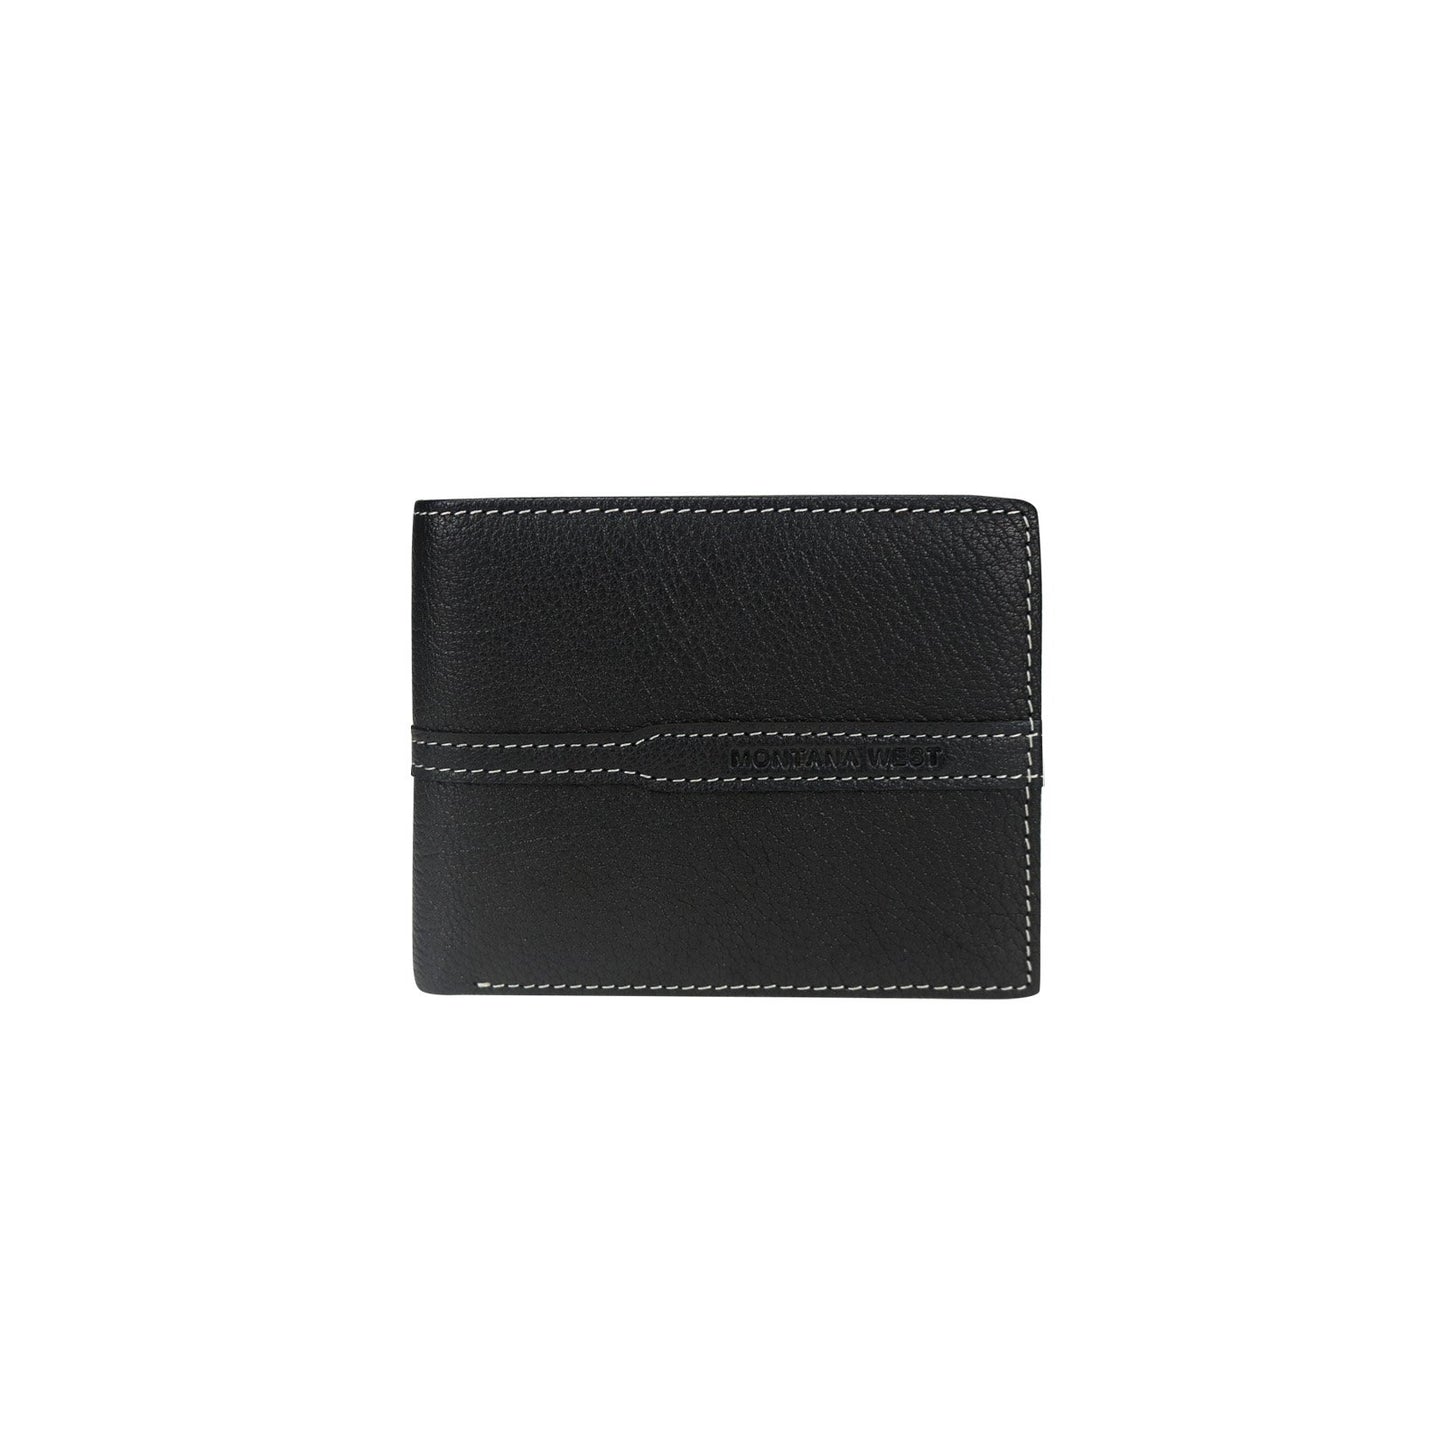 Genuine Leather Men's Wallet - Black